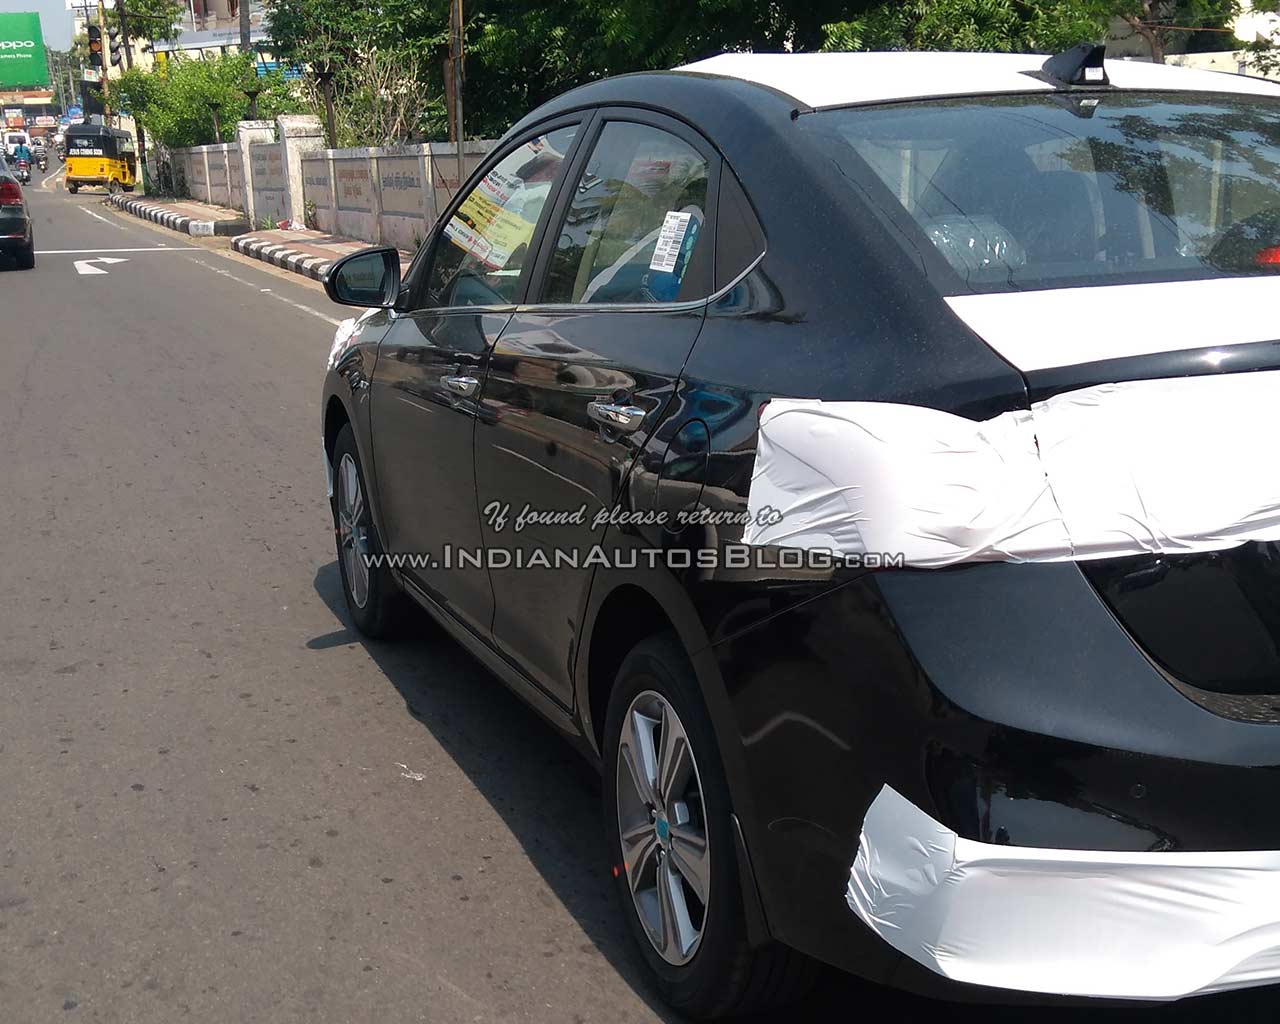 New Hyundai Verna Spotted In The Phantom Black Colour